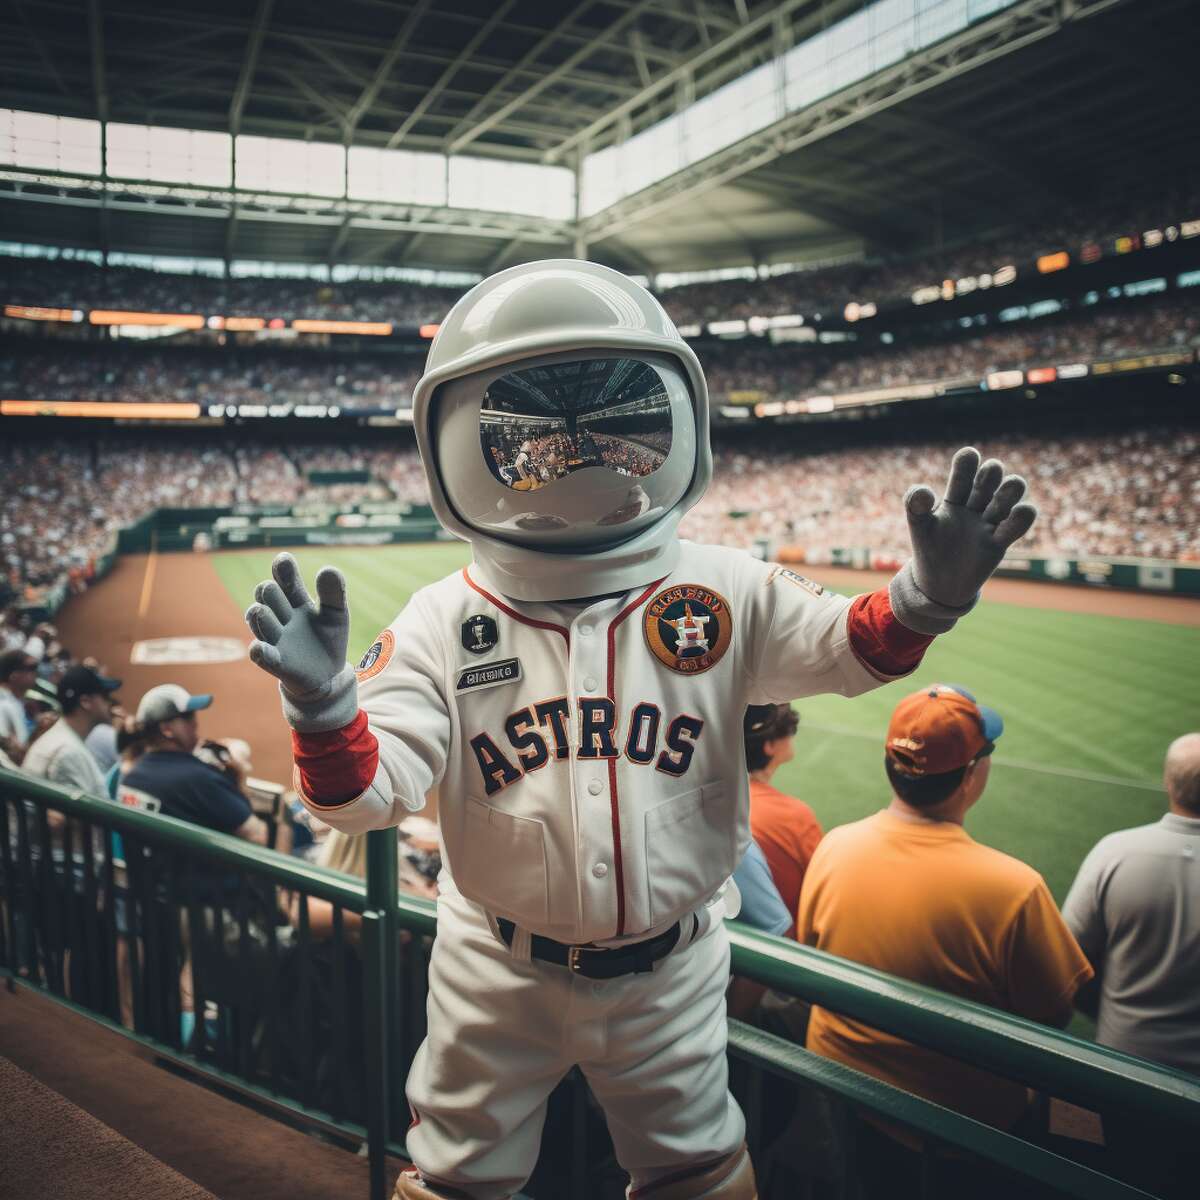 Orbit Houston Astros Mini Baby Bro Bobblehead at 's Sports